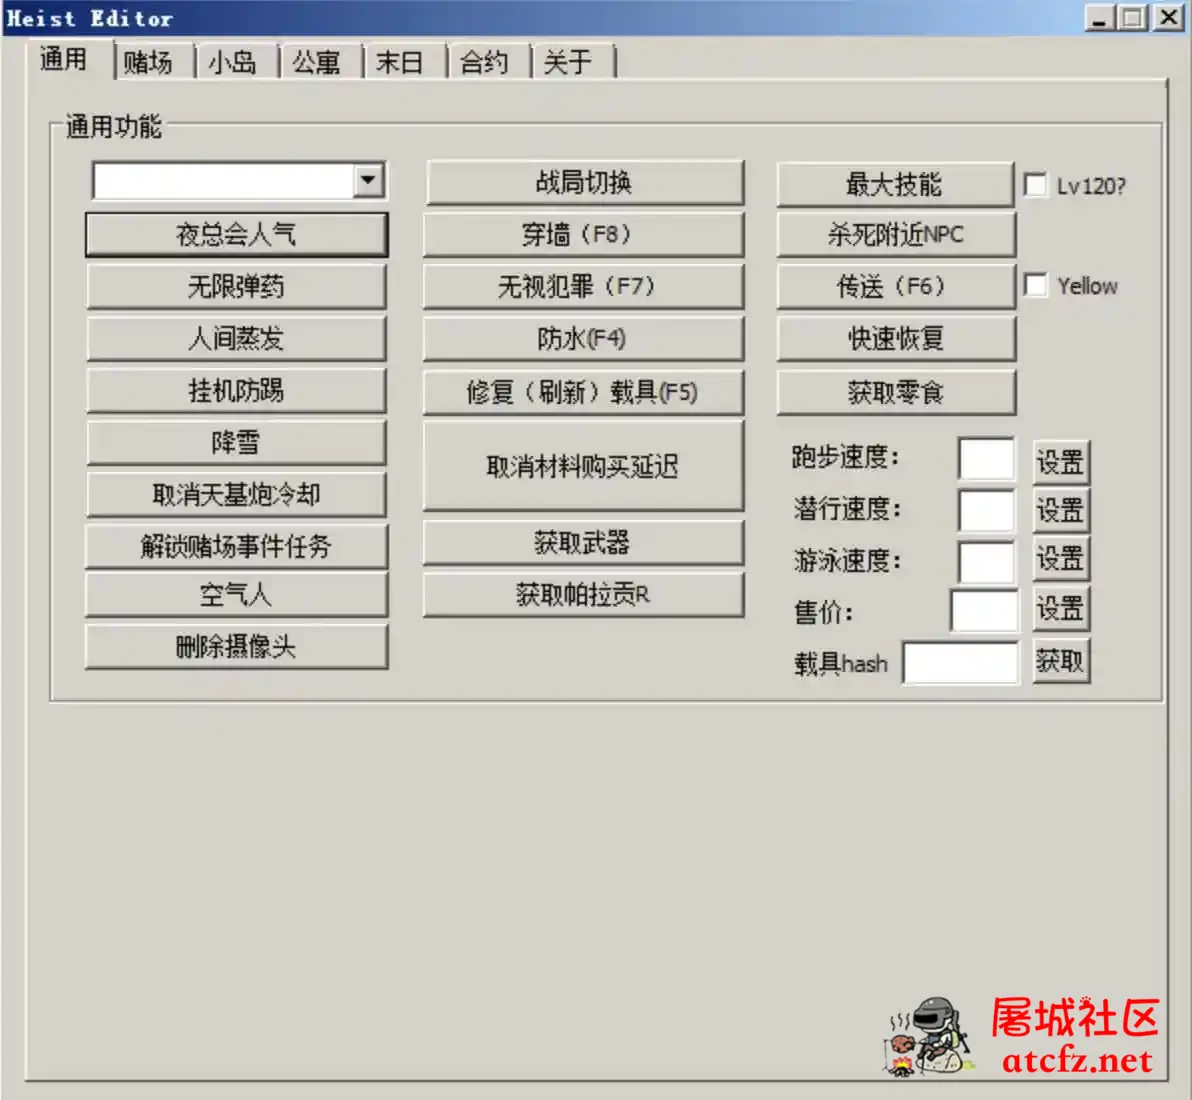 GTA5 Heist Editor外部抢劫编辑器 v3.5.7 屠城辅助网www.tcfz1.com8289